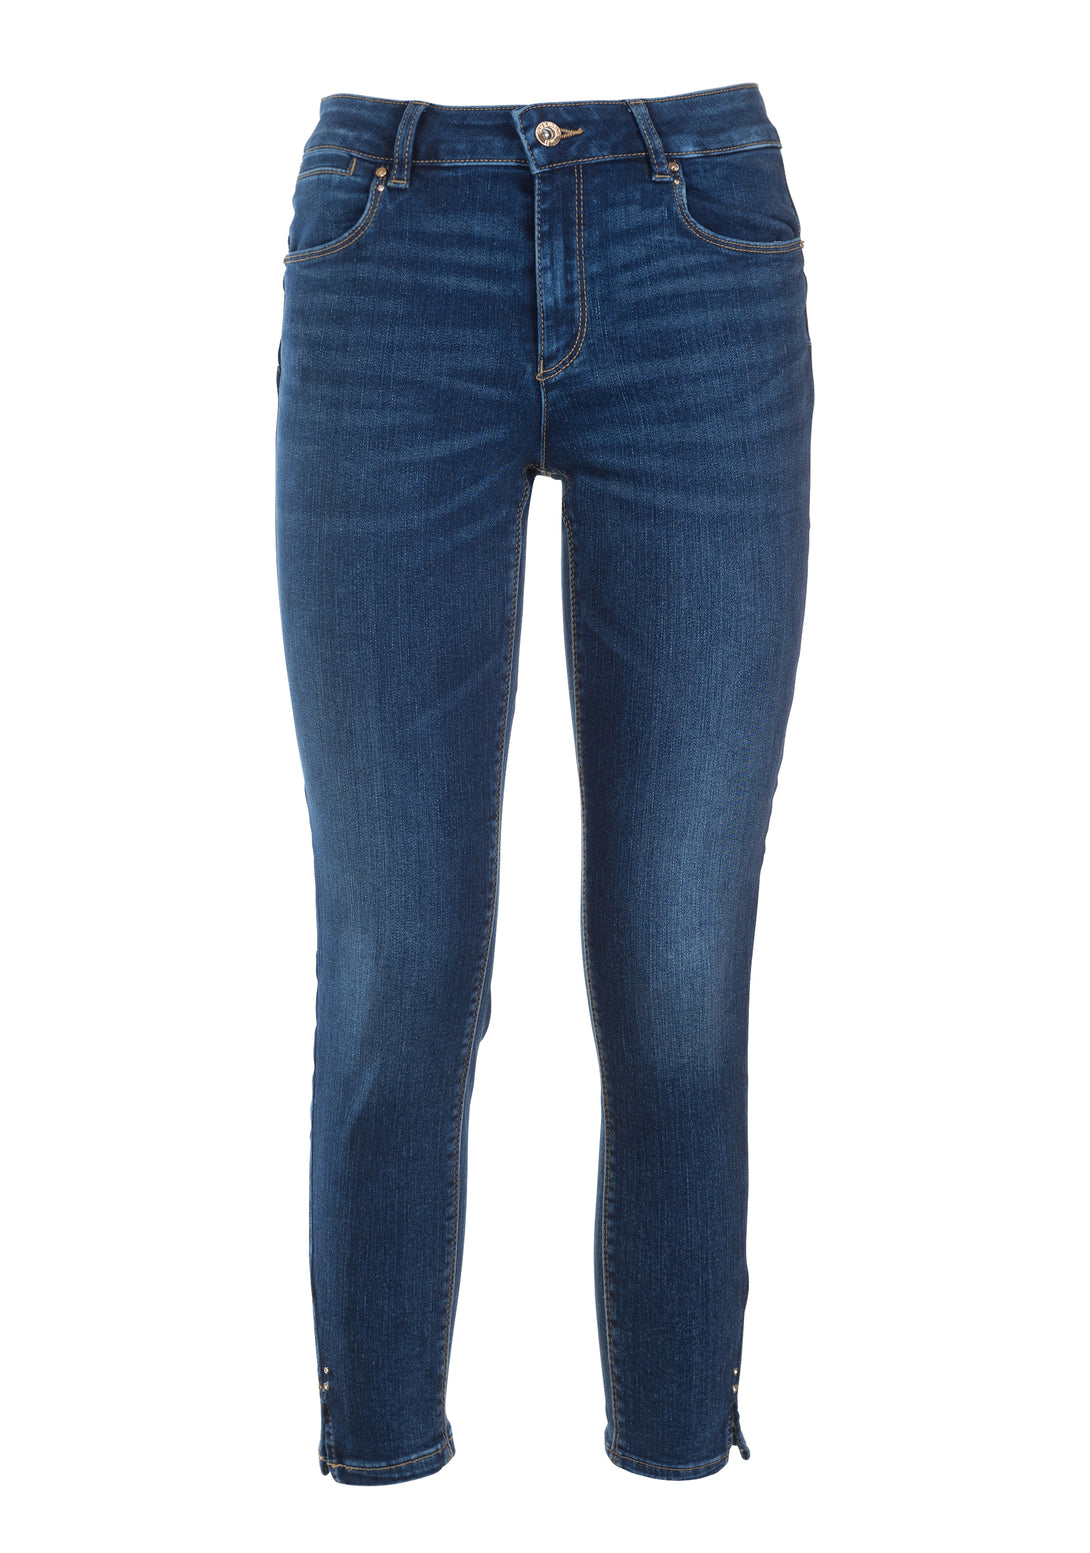 Jeans slim fit made in denim with dark wash